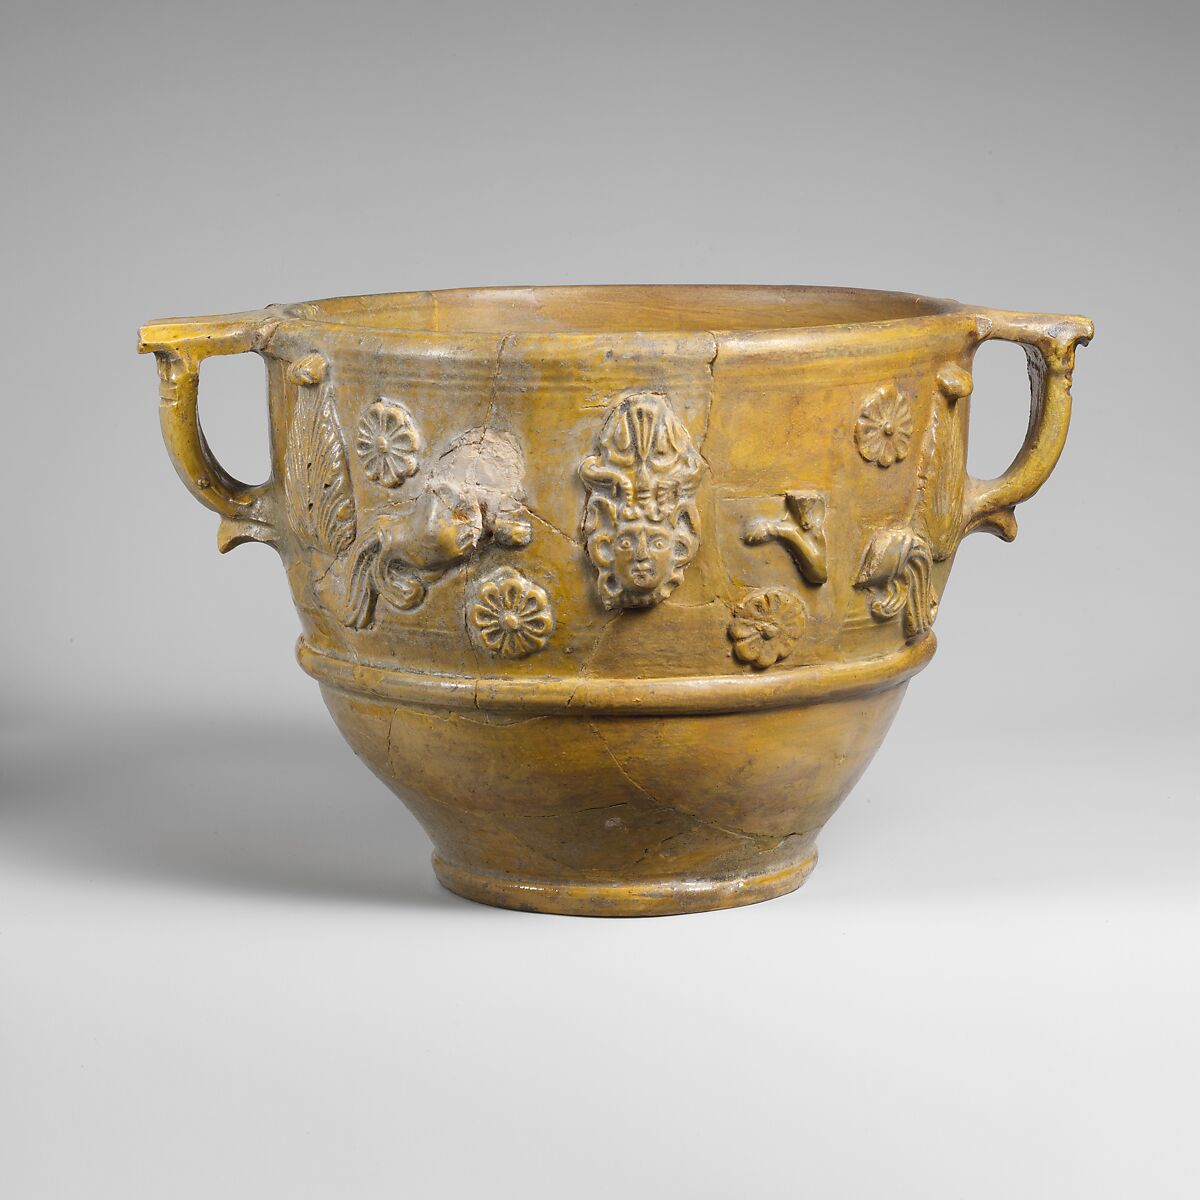 Fragmentary terracotta scyphus (drinking cup), Terracotta, Roman 